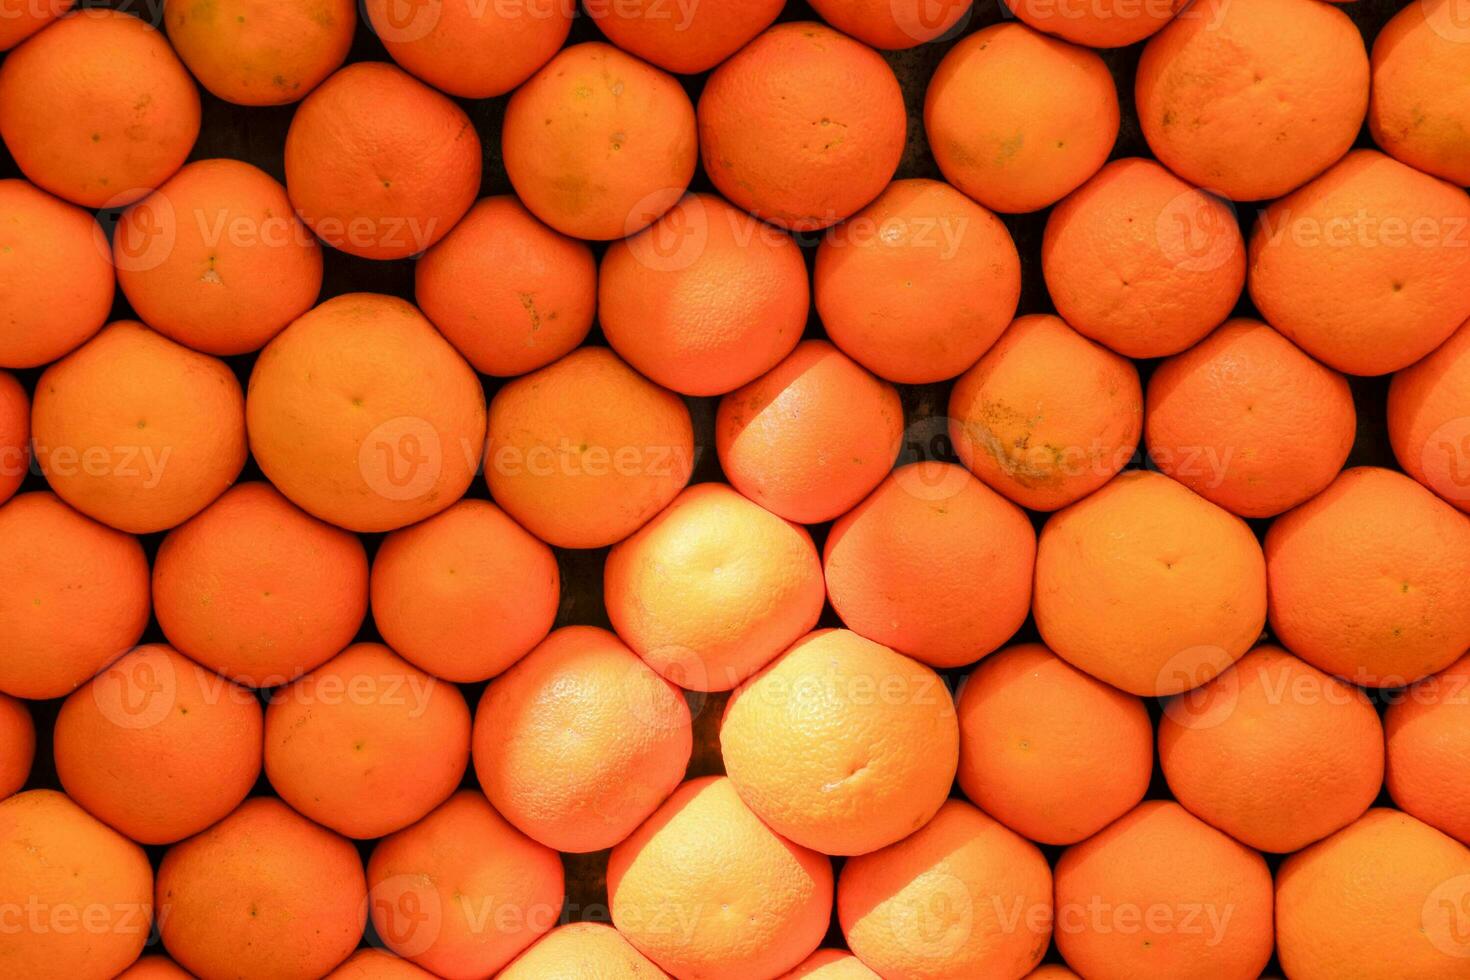 Contexte texture de Orange fruit. photo